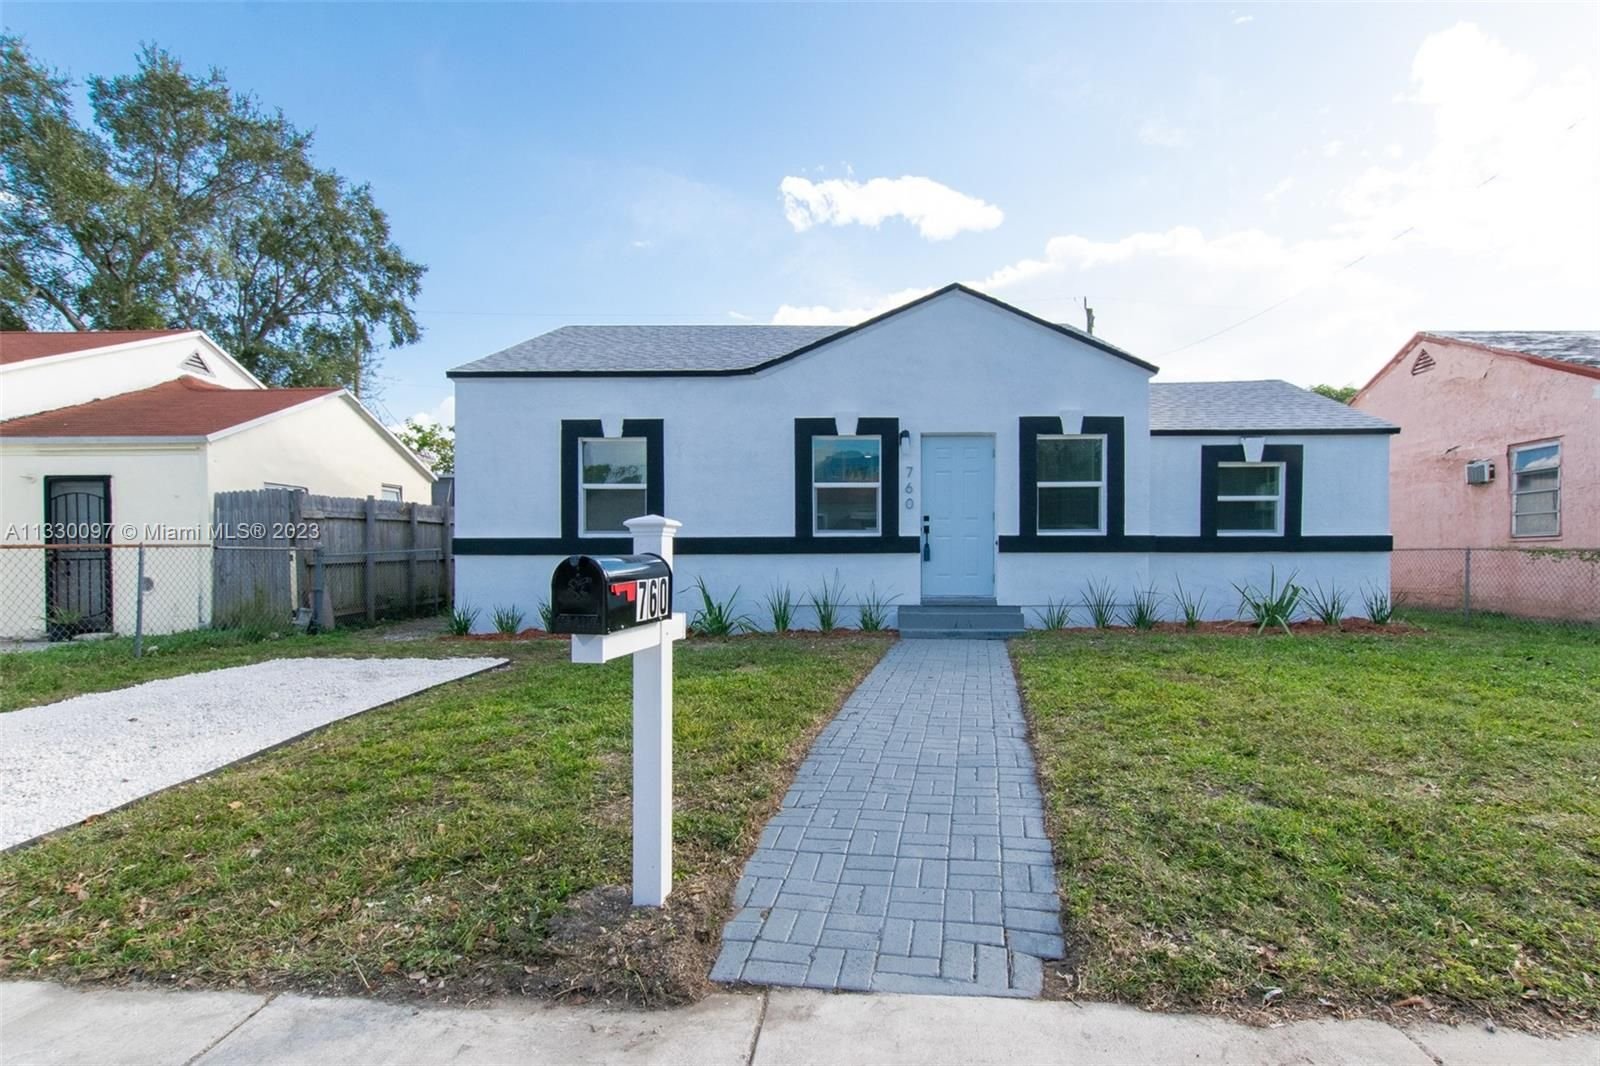 Real estate property located at 760 65th St, Miami-Dade County, Miami, FL